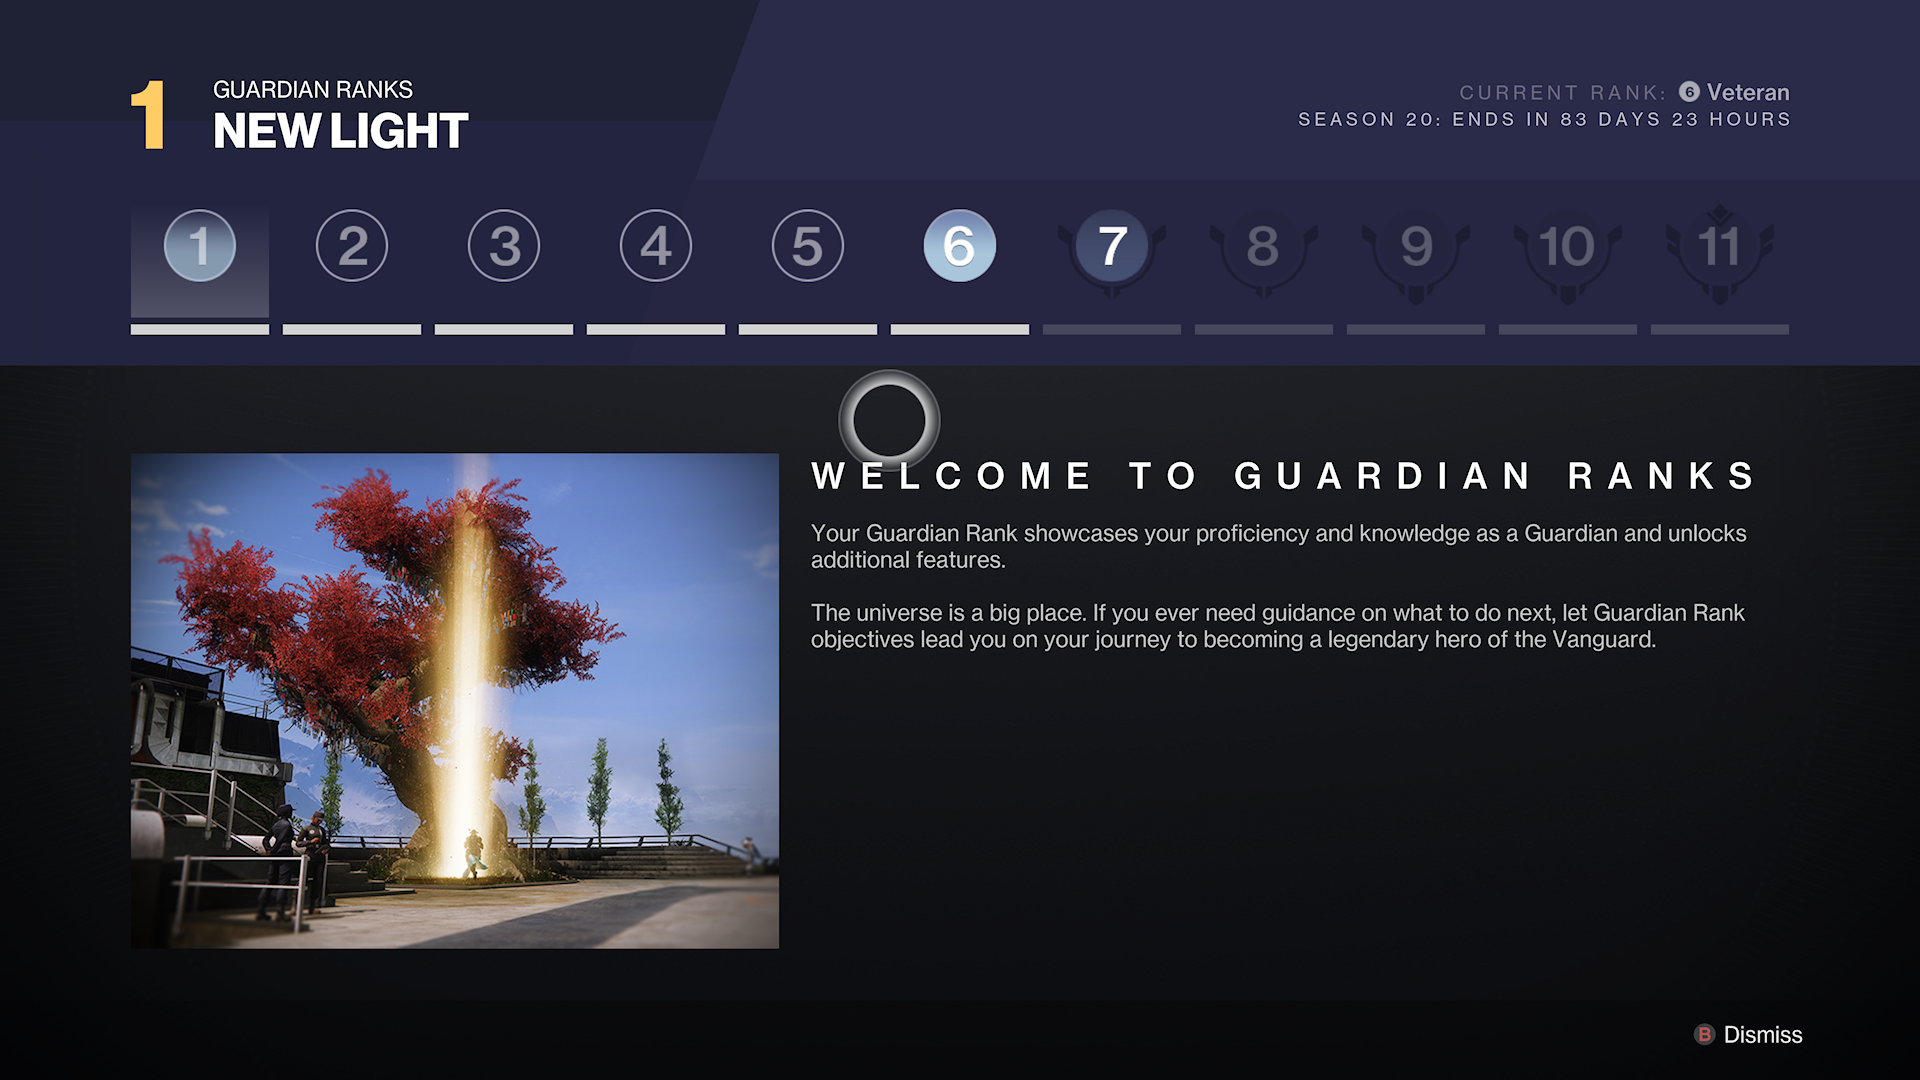 Destiny 2 Lightfall - Pantalla de bienvenida de Guardian Ranks que muestra 11 rangos